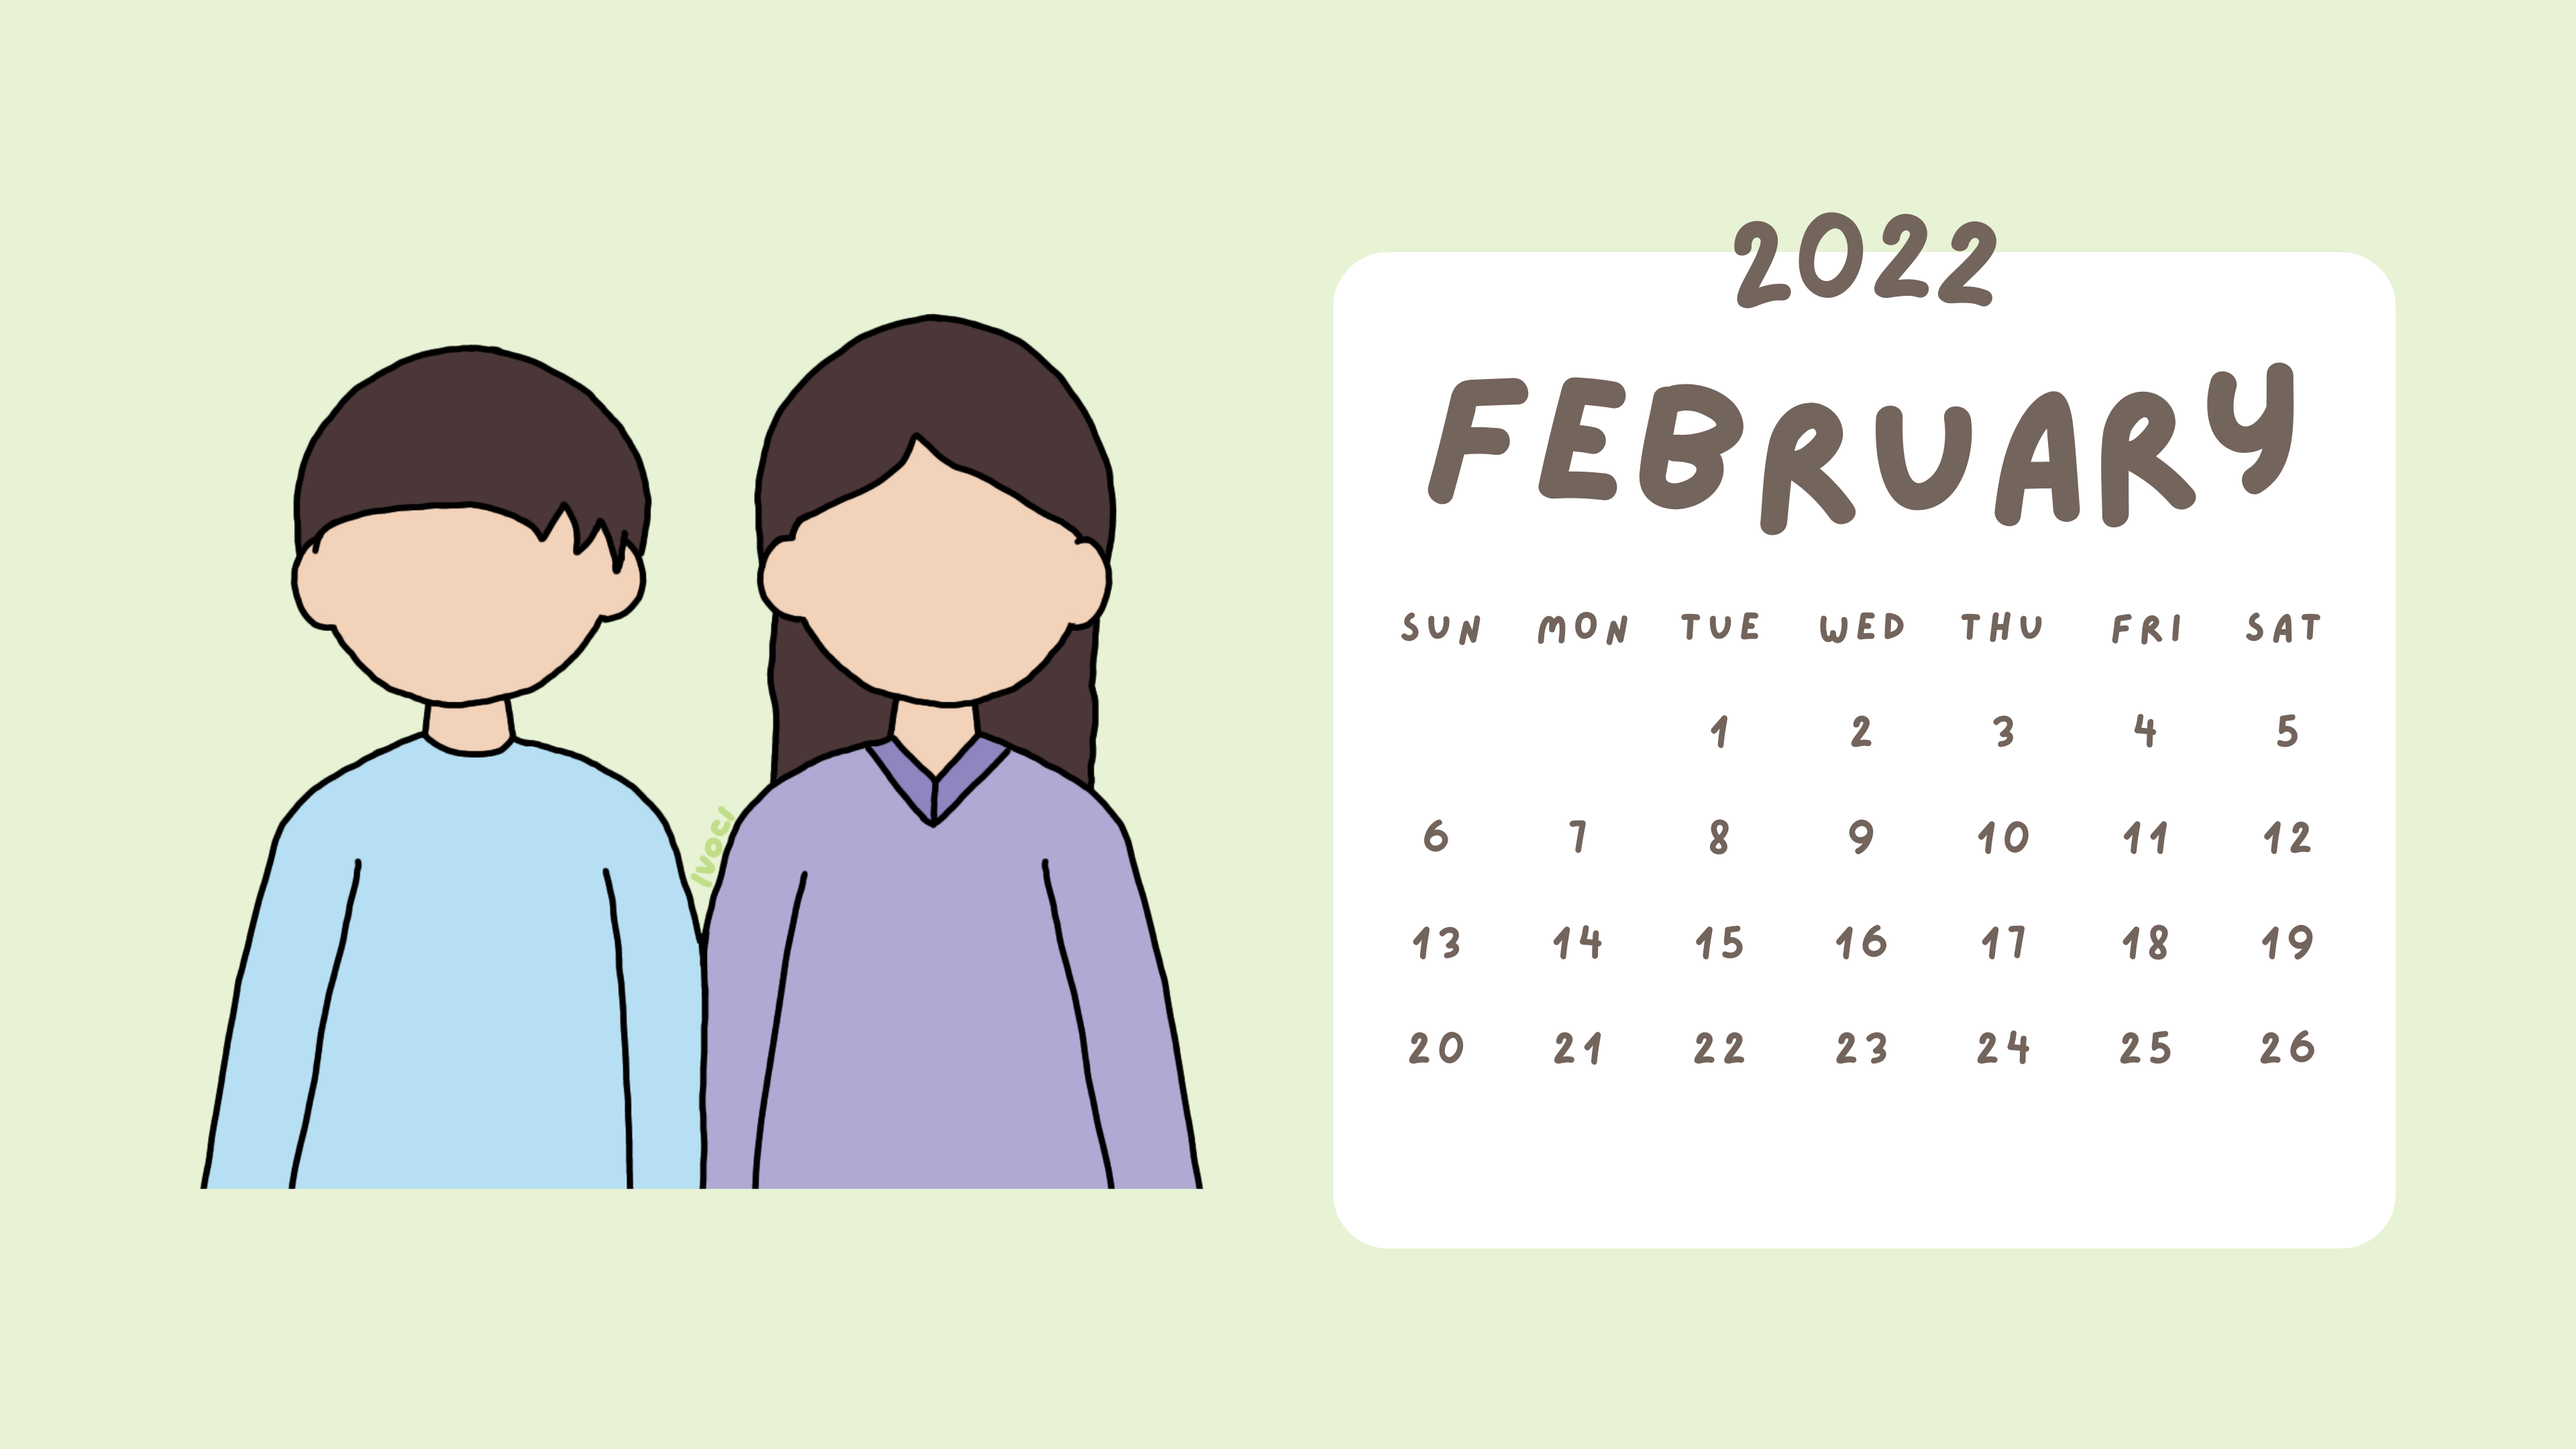 ivoci - Free Download: February 2022 Calendar Desktop Wallpapers - 2